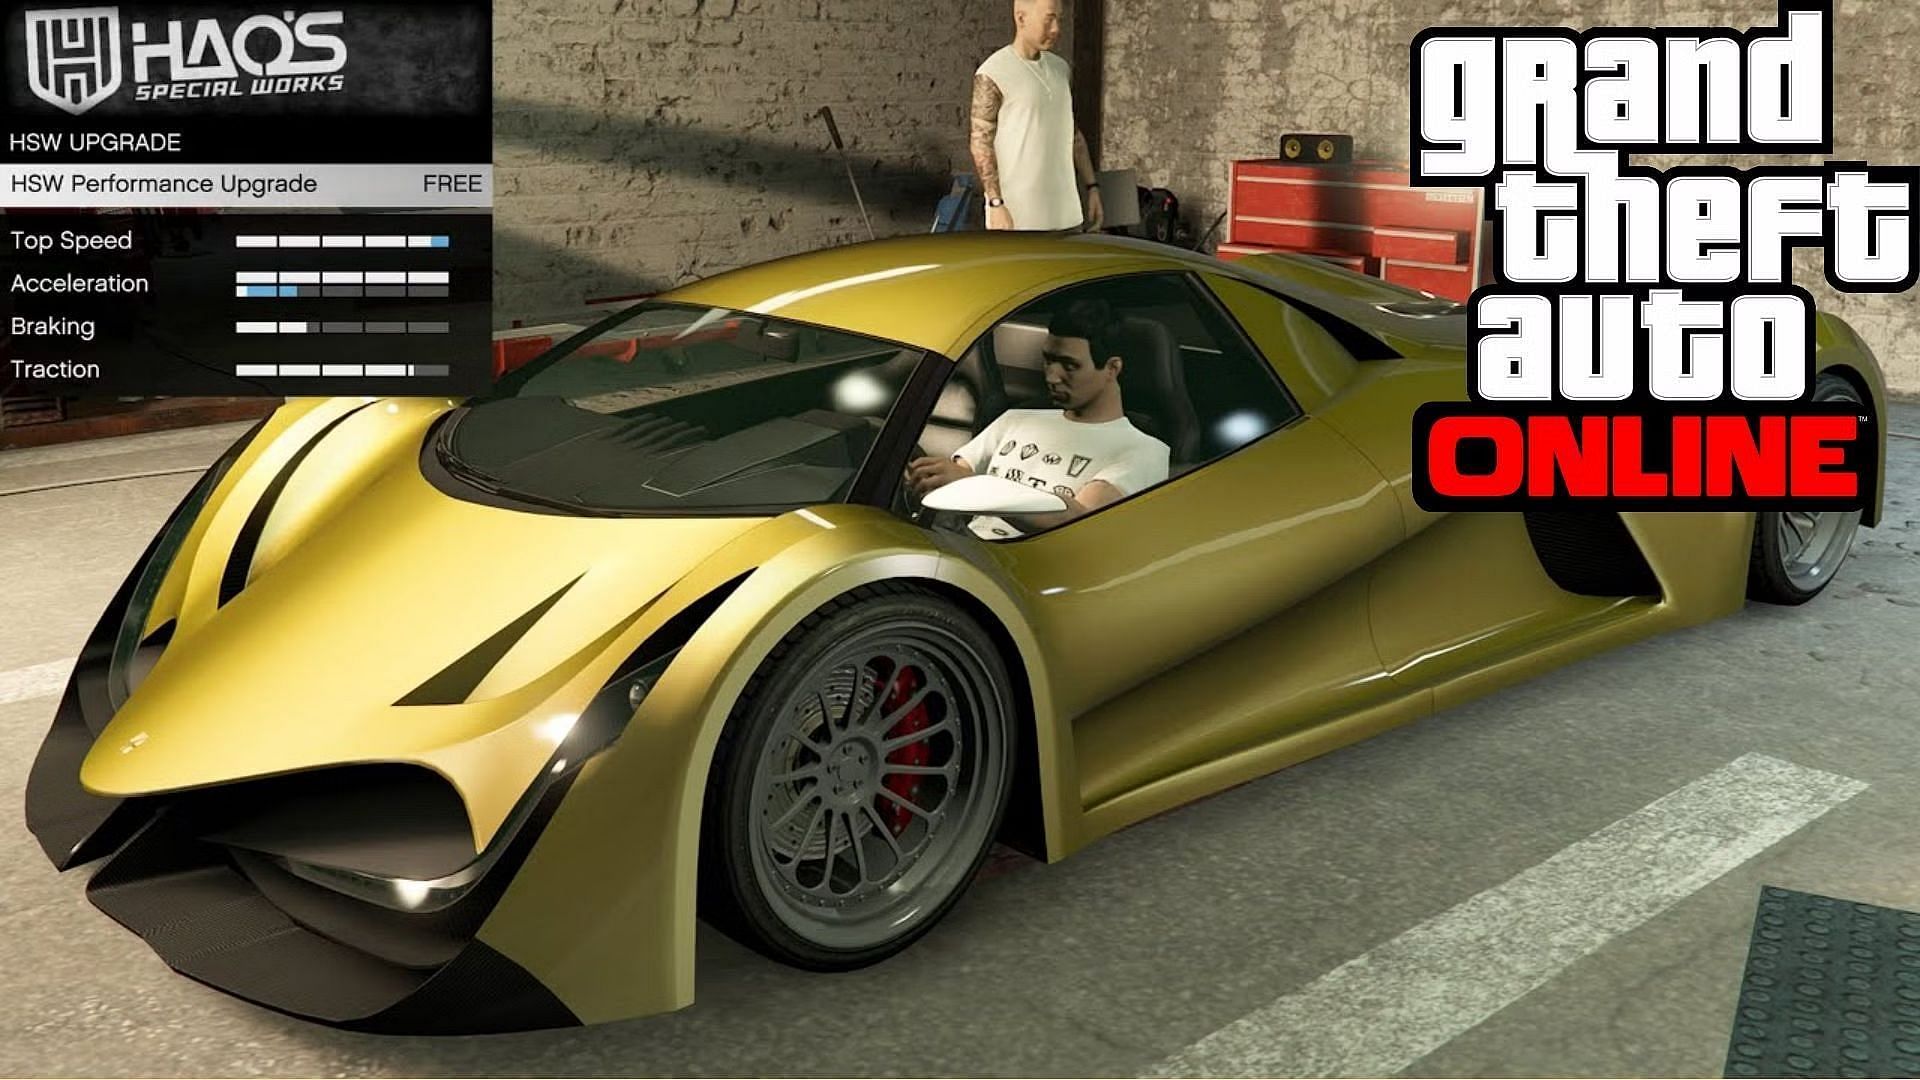 GTA Online 50 vehicle multistorey garage to set players back a